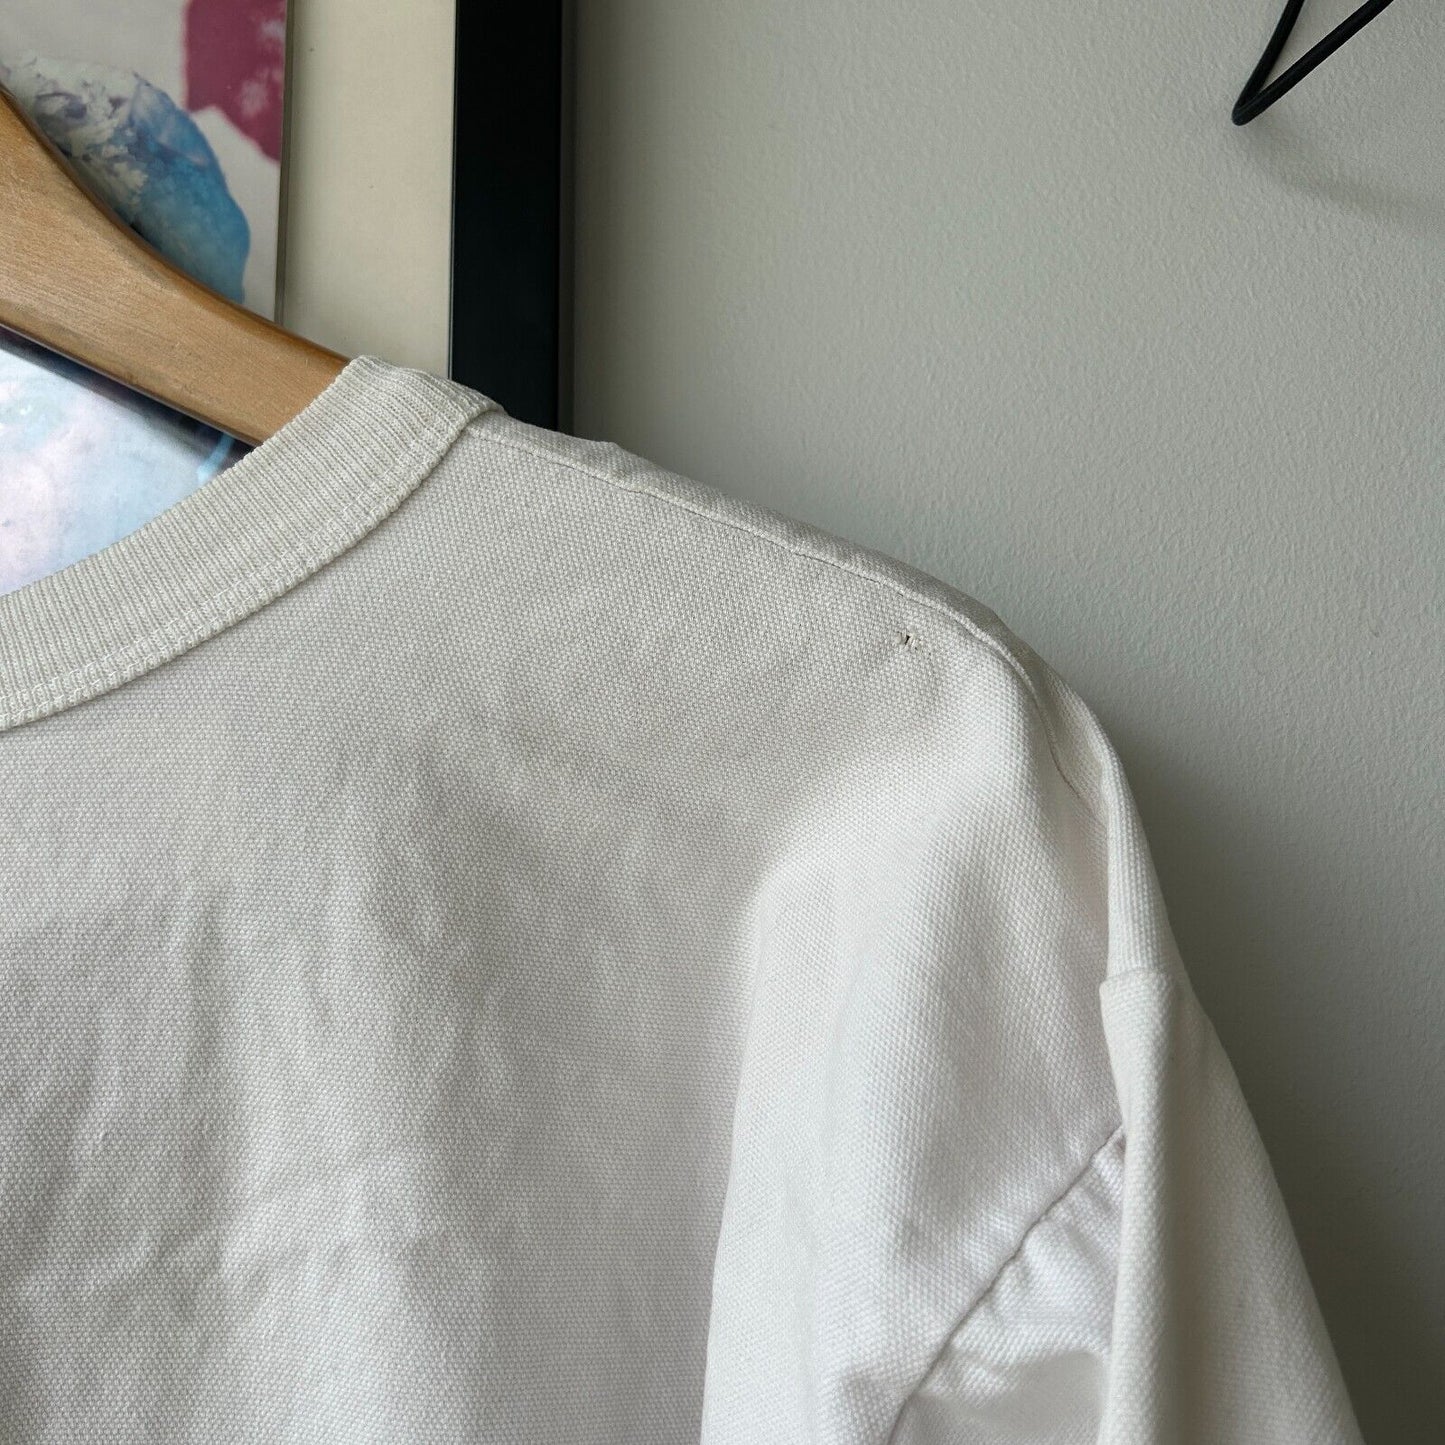 VINTAGE 80s | REEBOK Embroidered Logo White Cotton Canvas Sweater sz M-L Adult